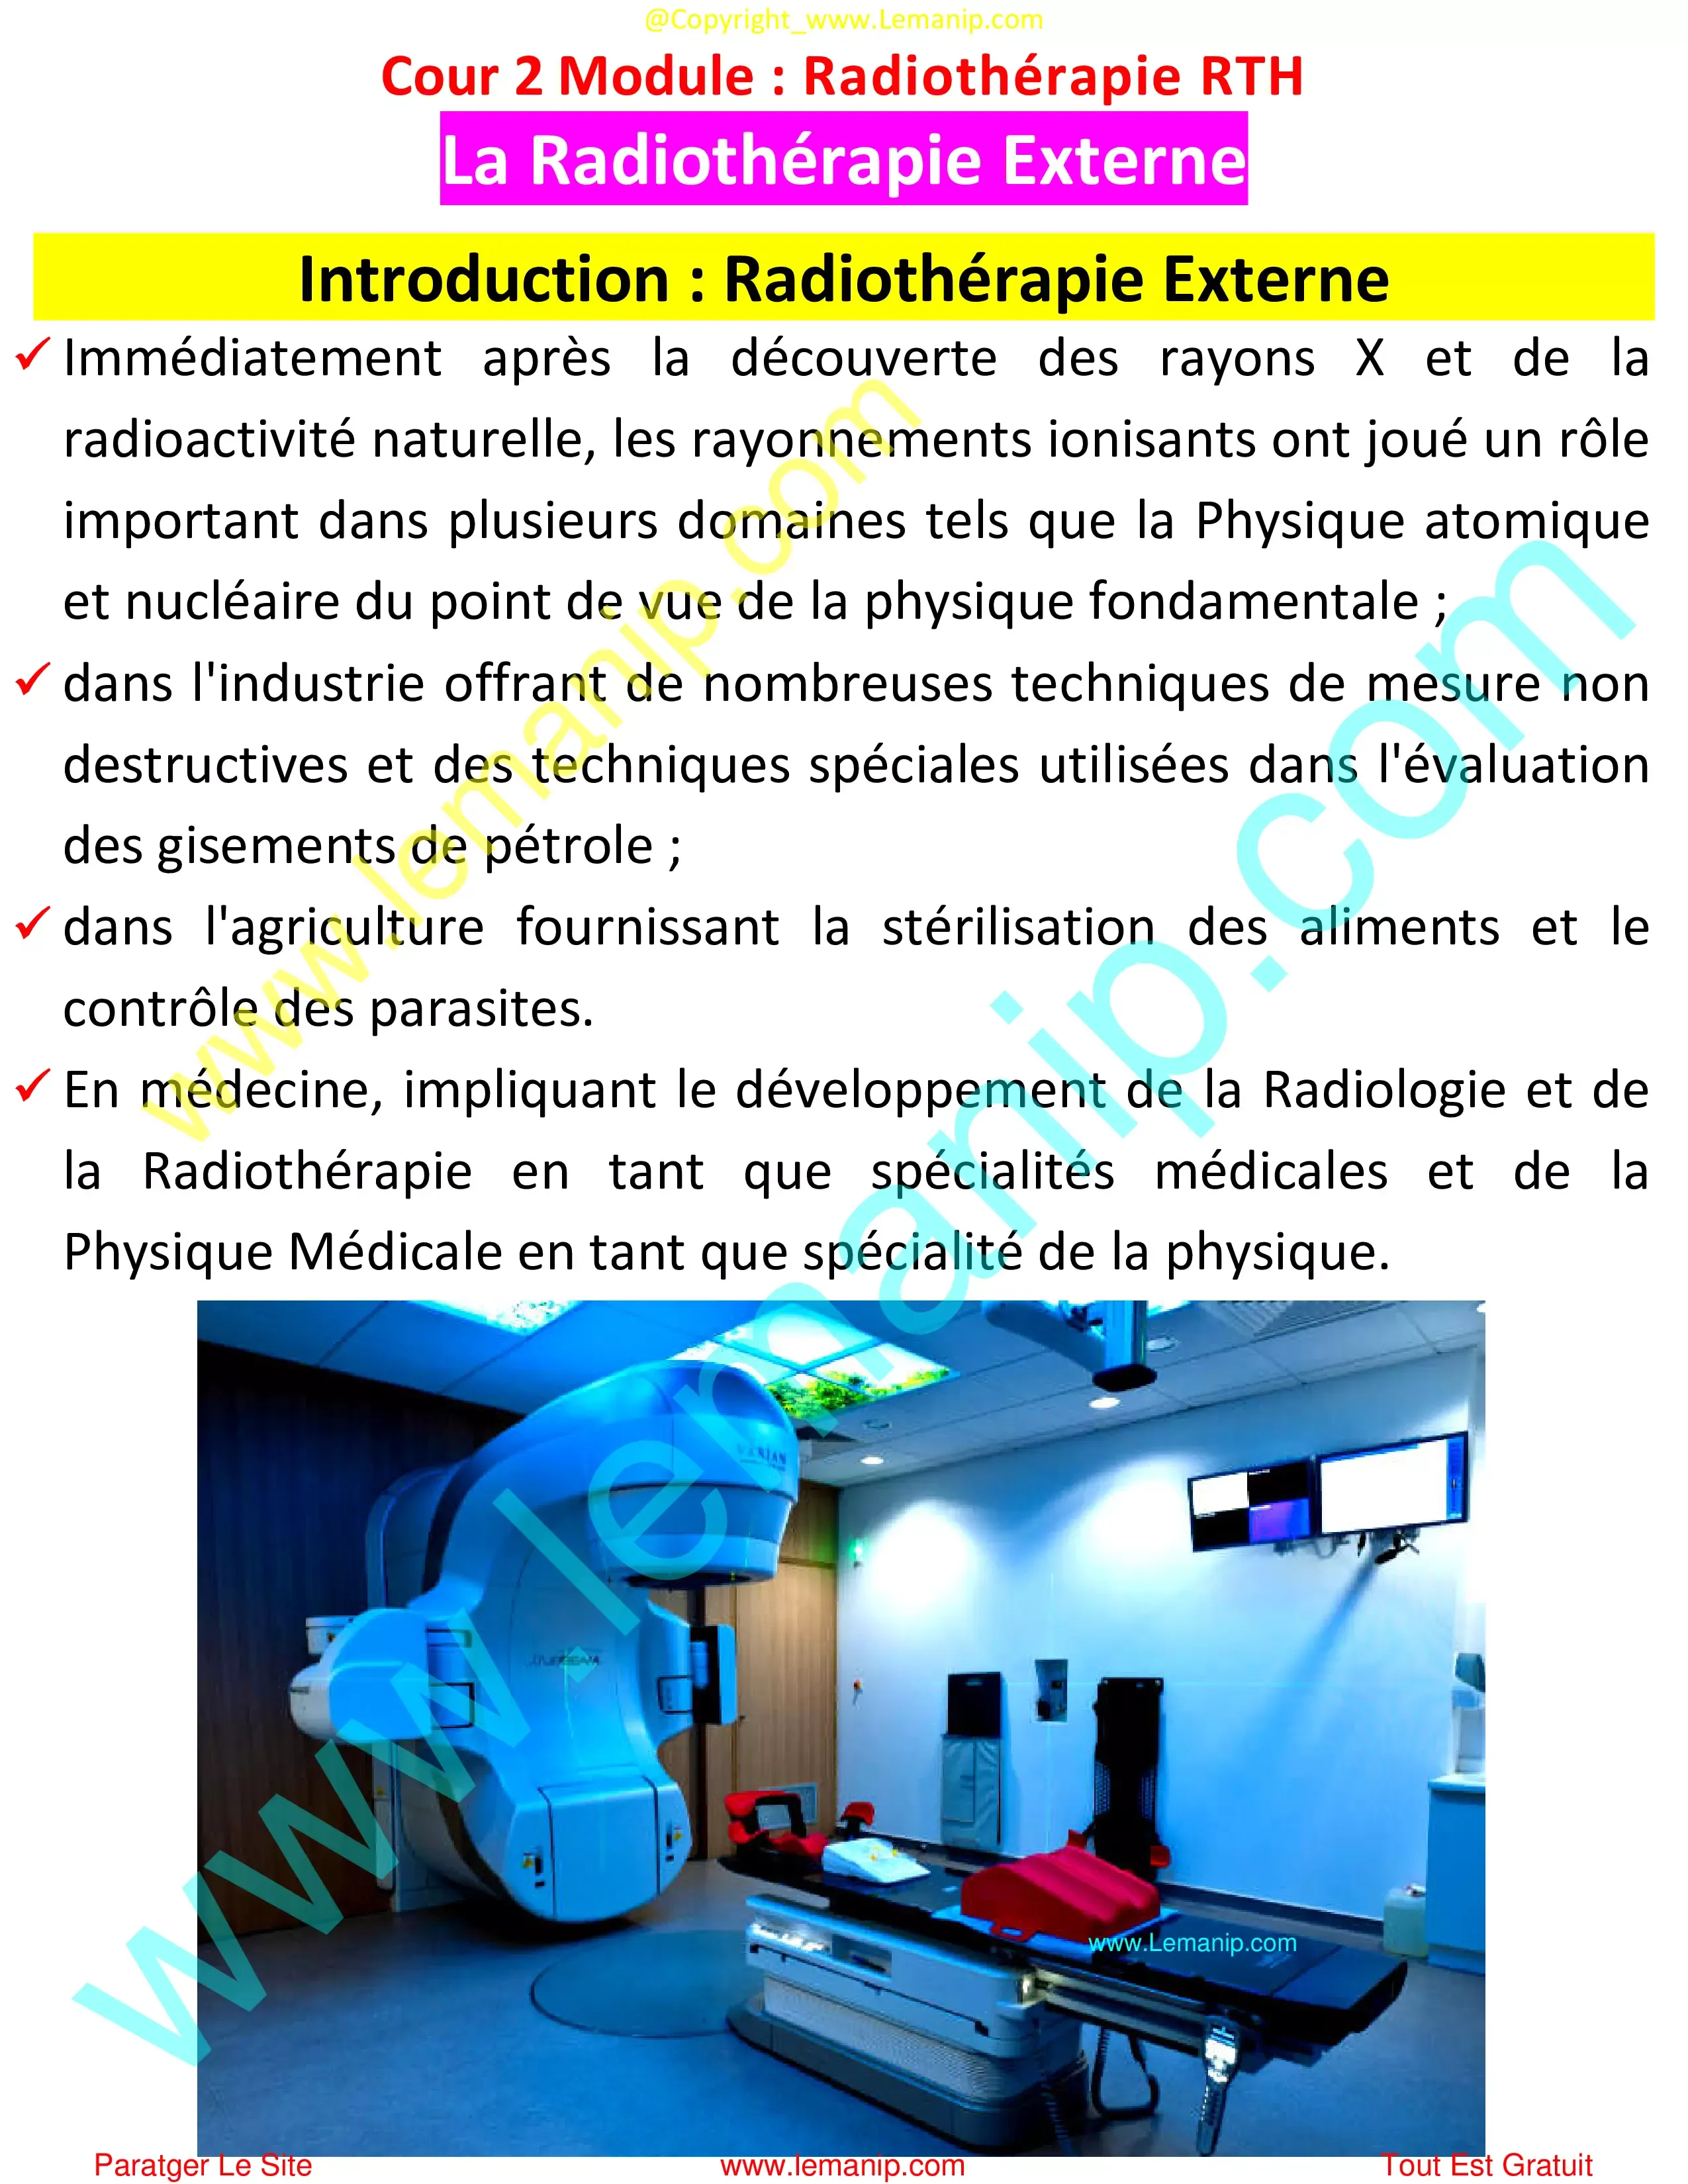 Introduction : Radiothérapie Externe